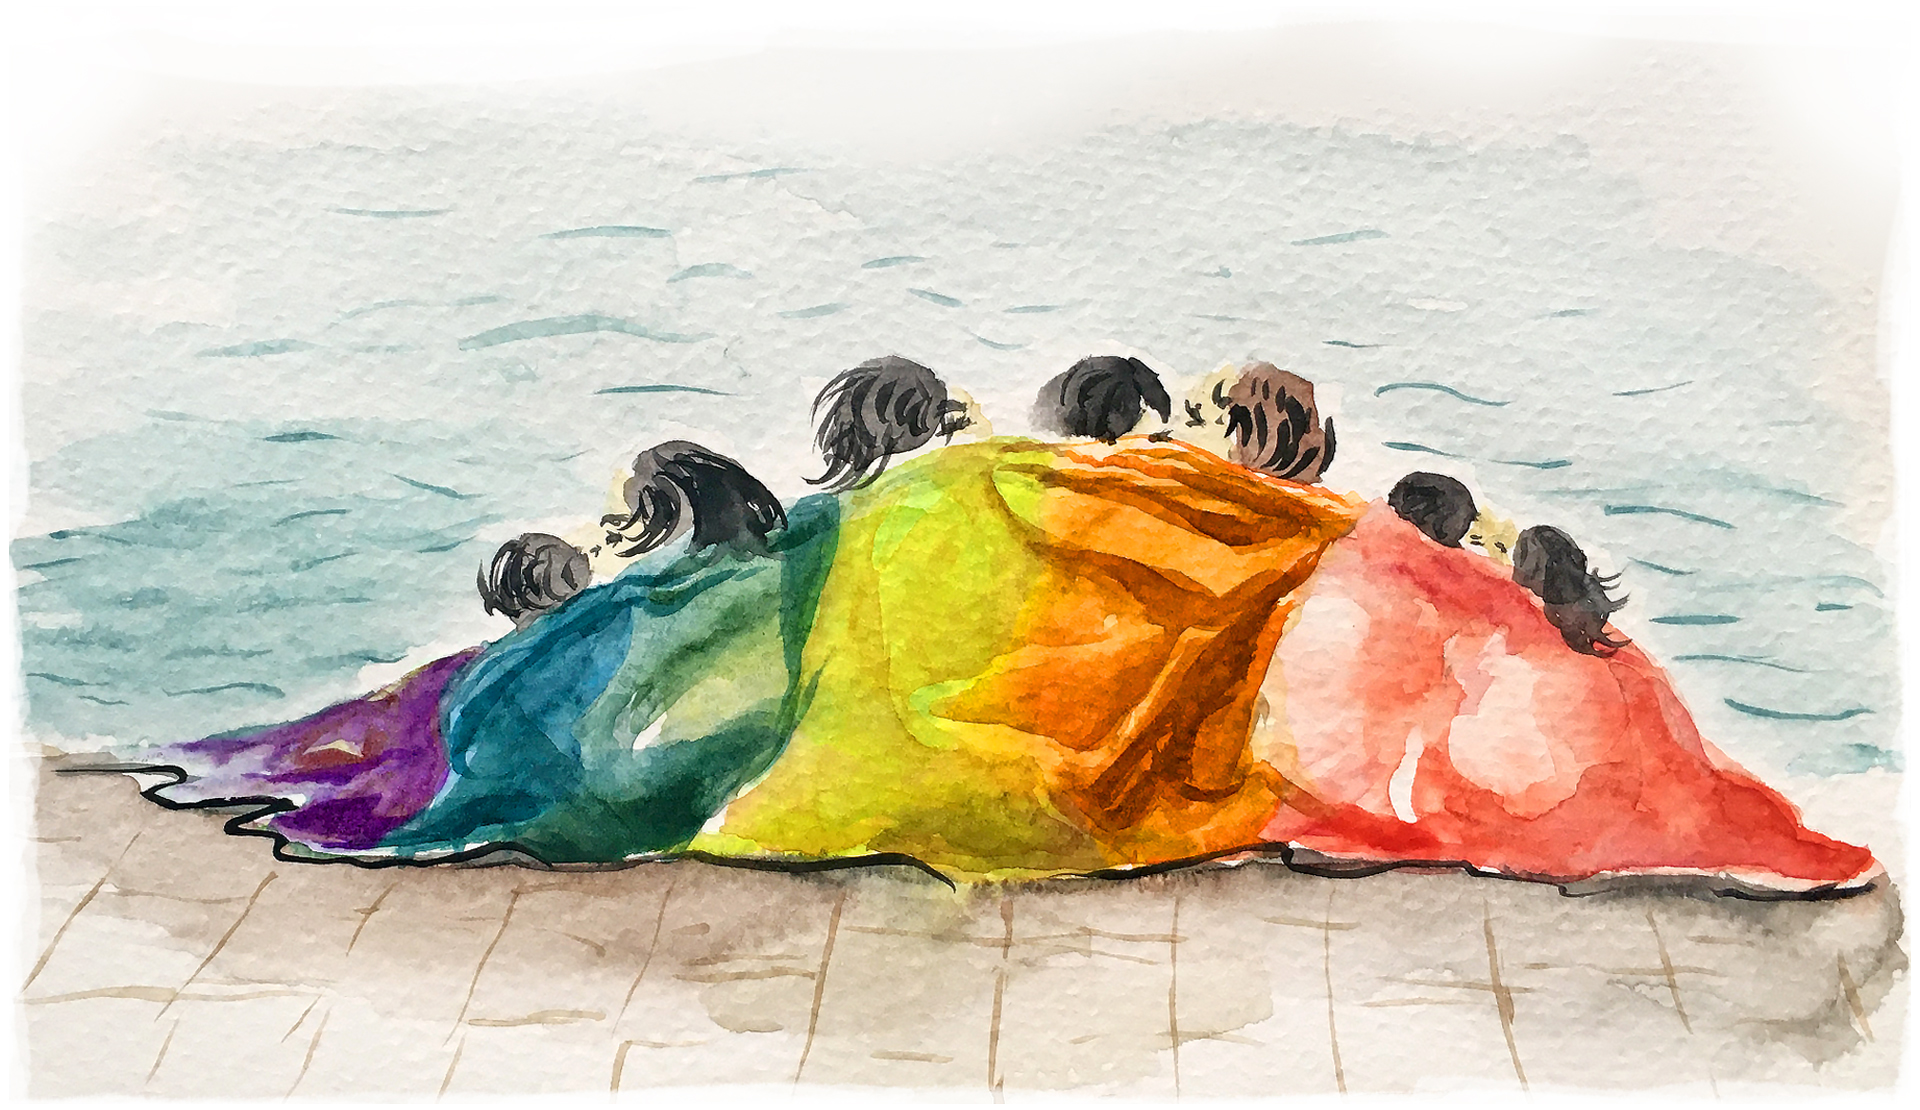 Deprem sonrası LGBTİ+’larla dayanışma raporu çıktı | Kaos GL - LGBTİ+ Haber Portalı Haber